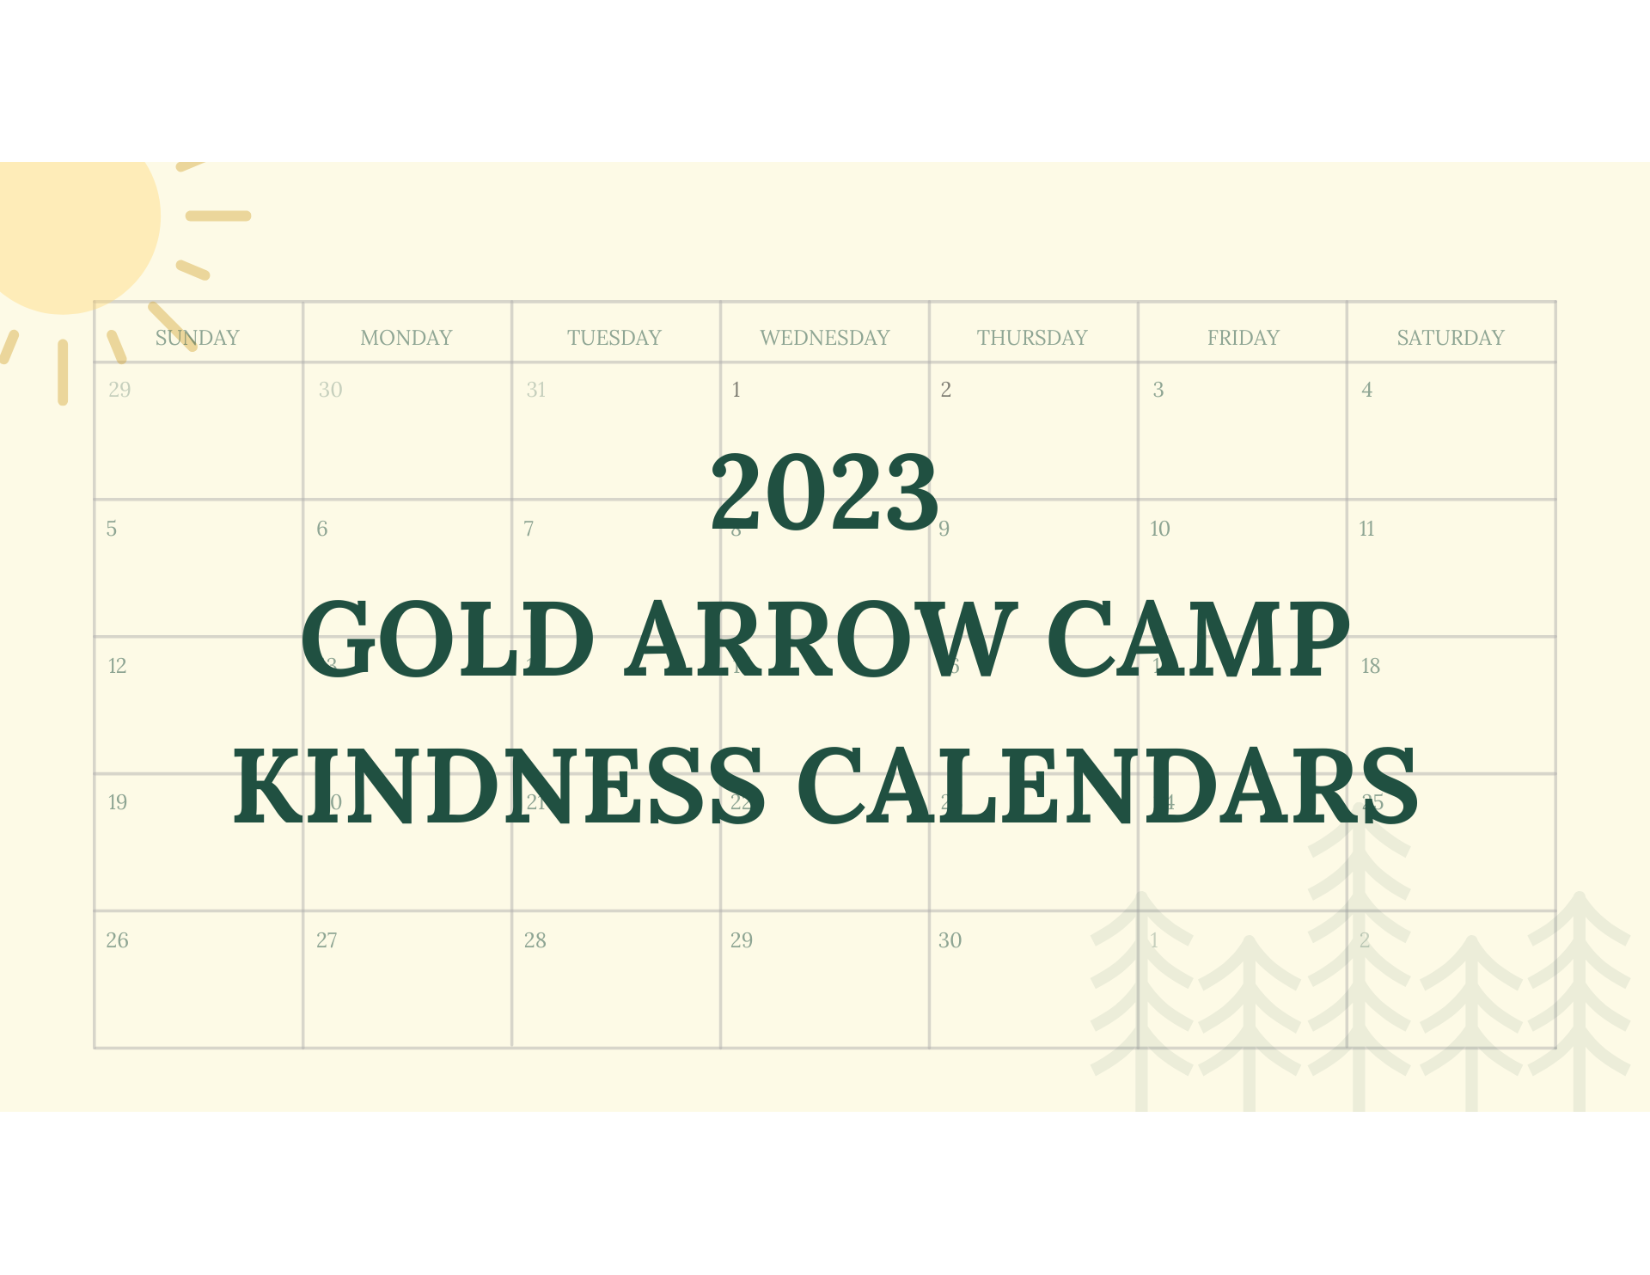 september-kindness-calendar